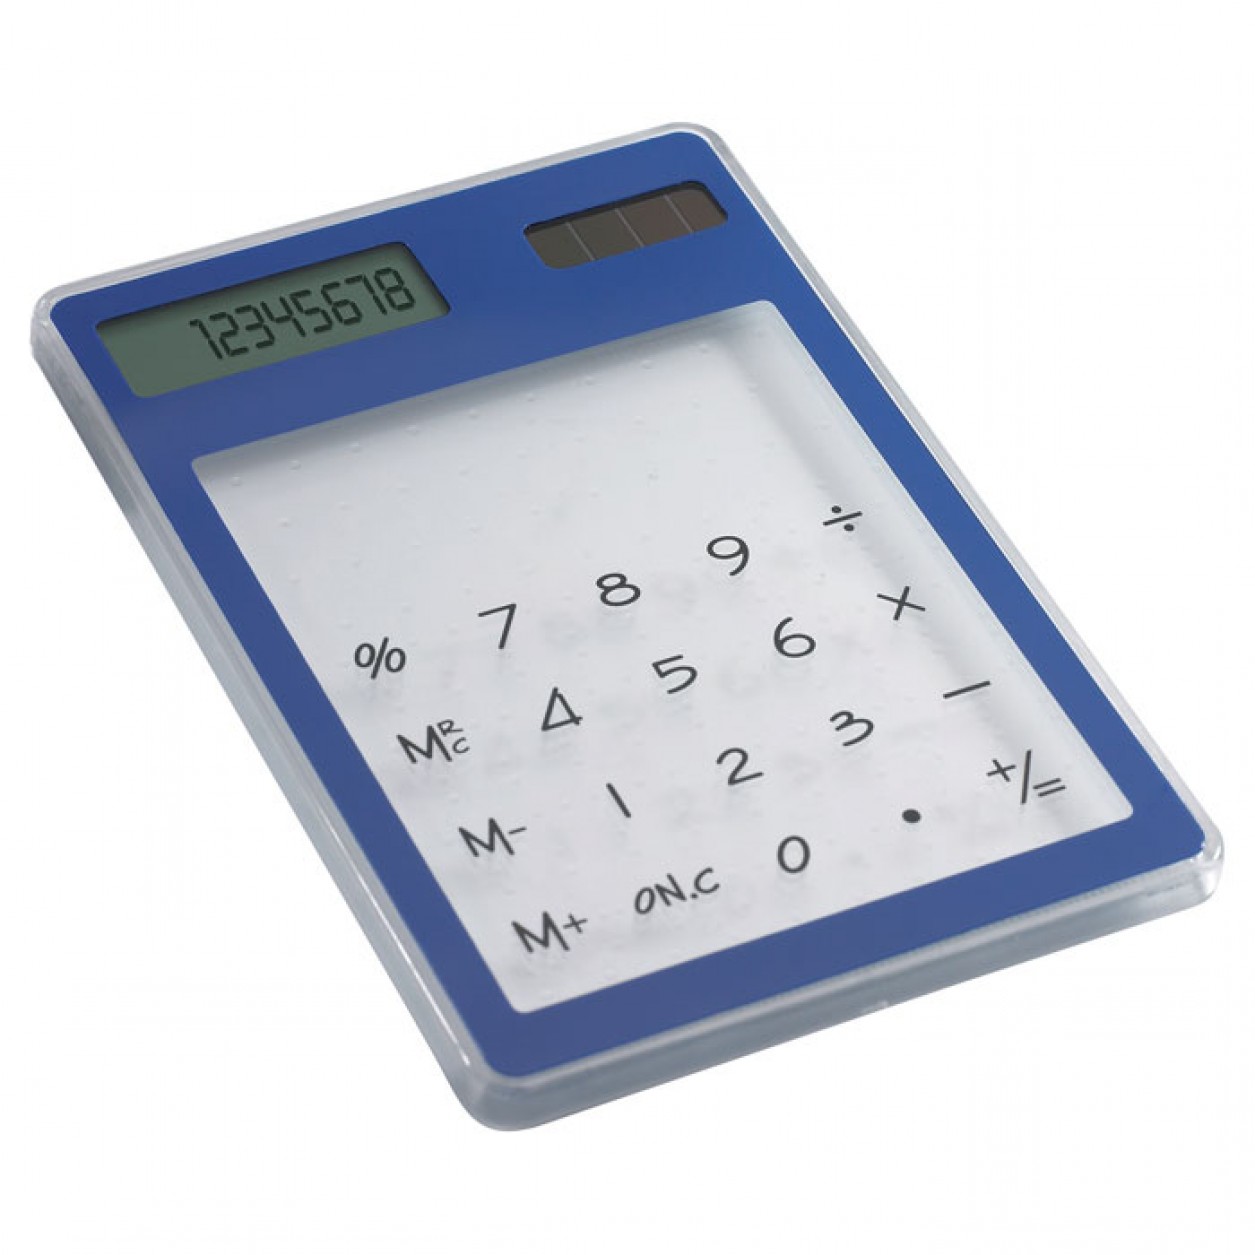 OS-0132 calculators malamalama la